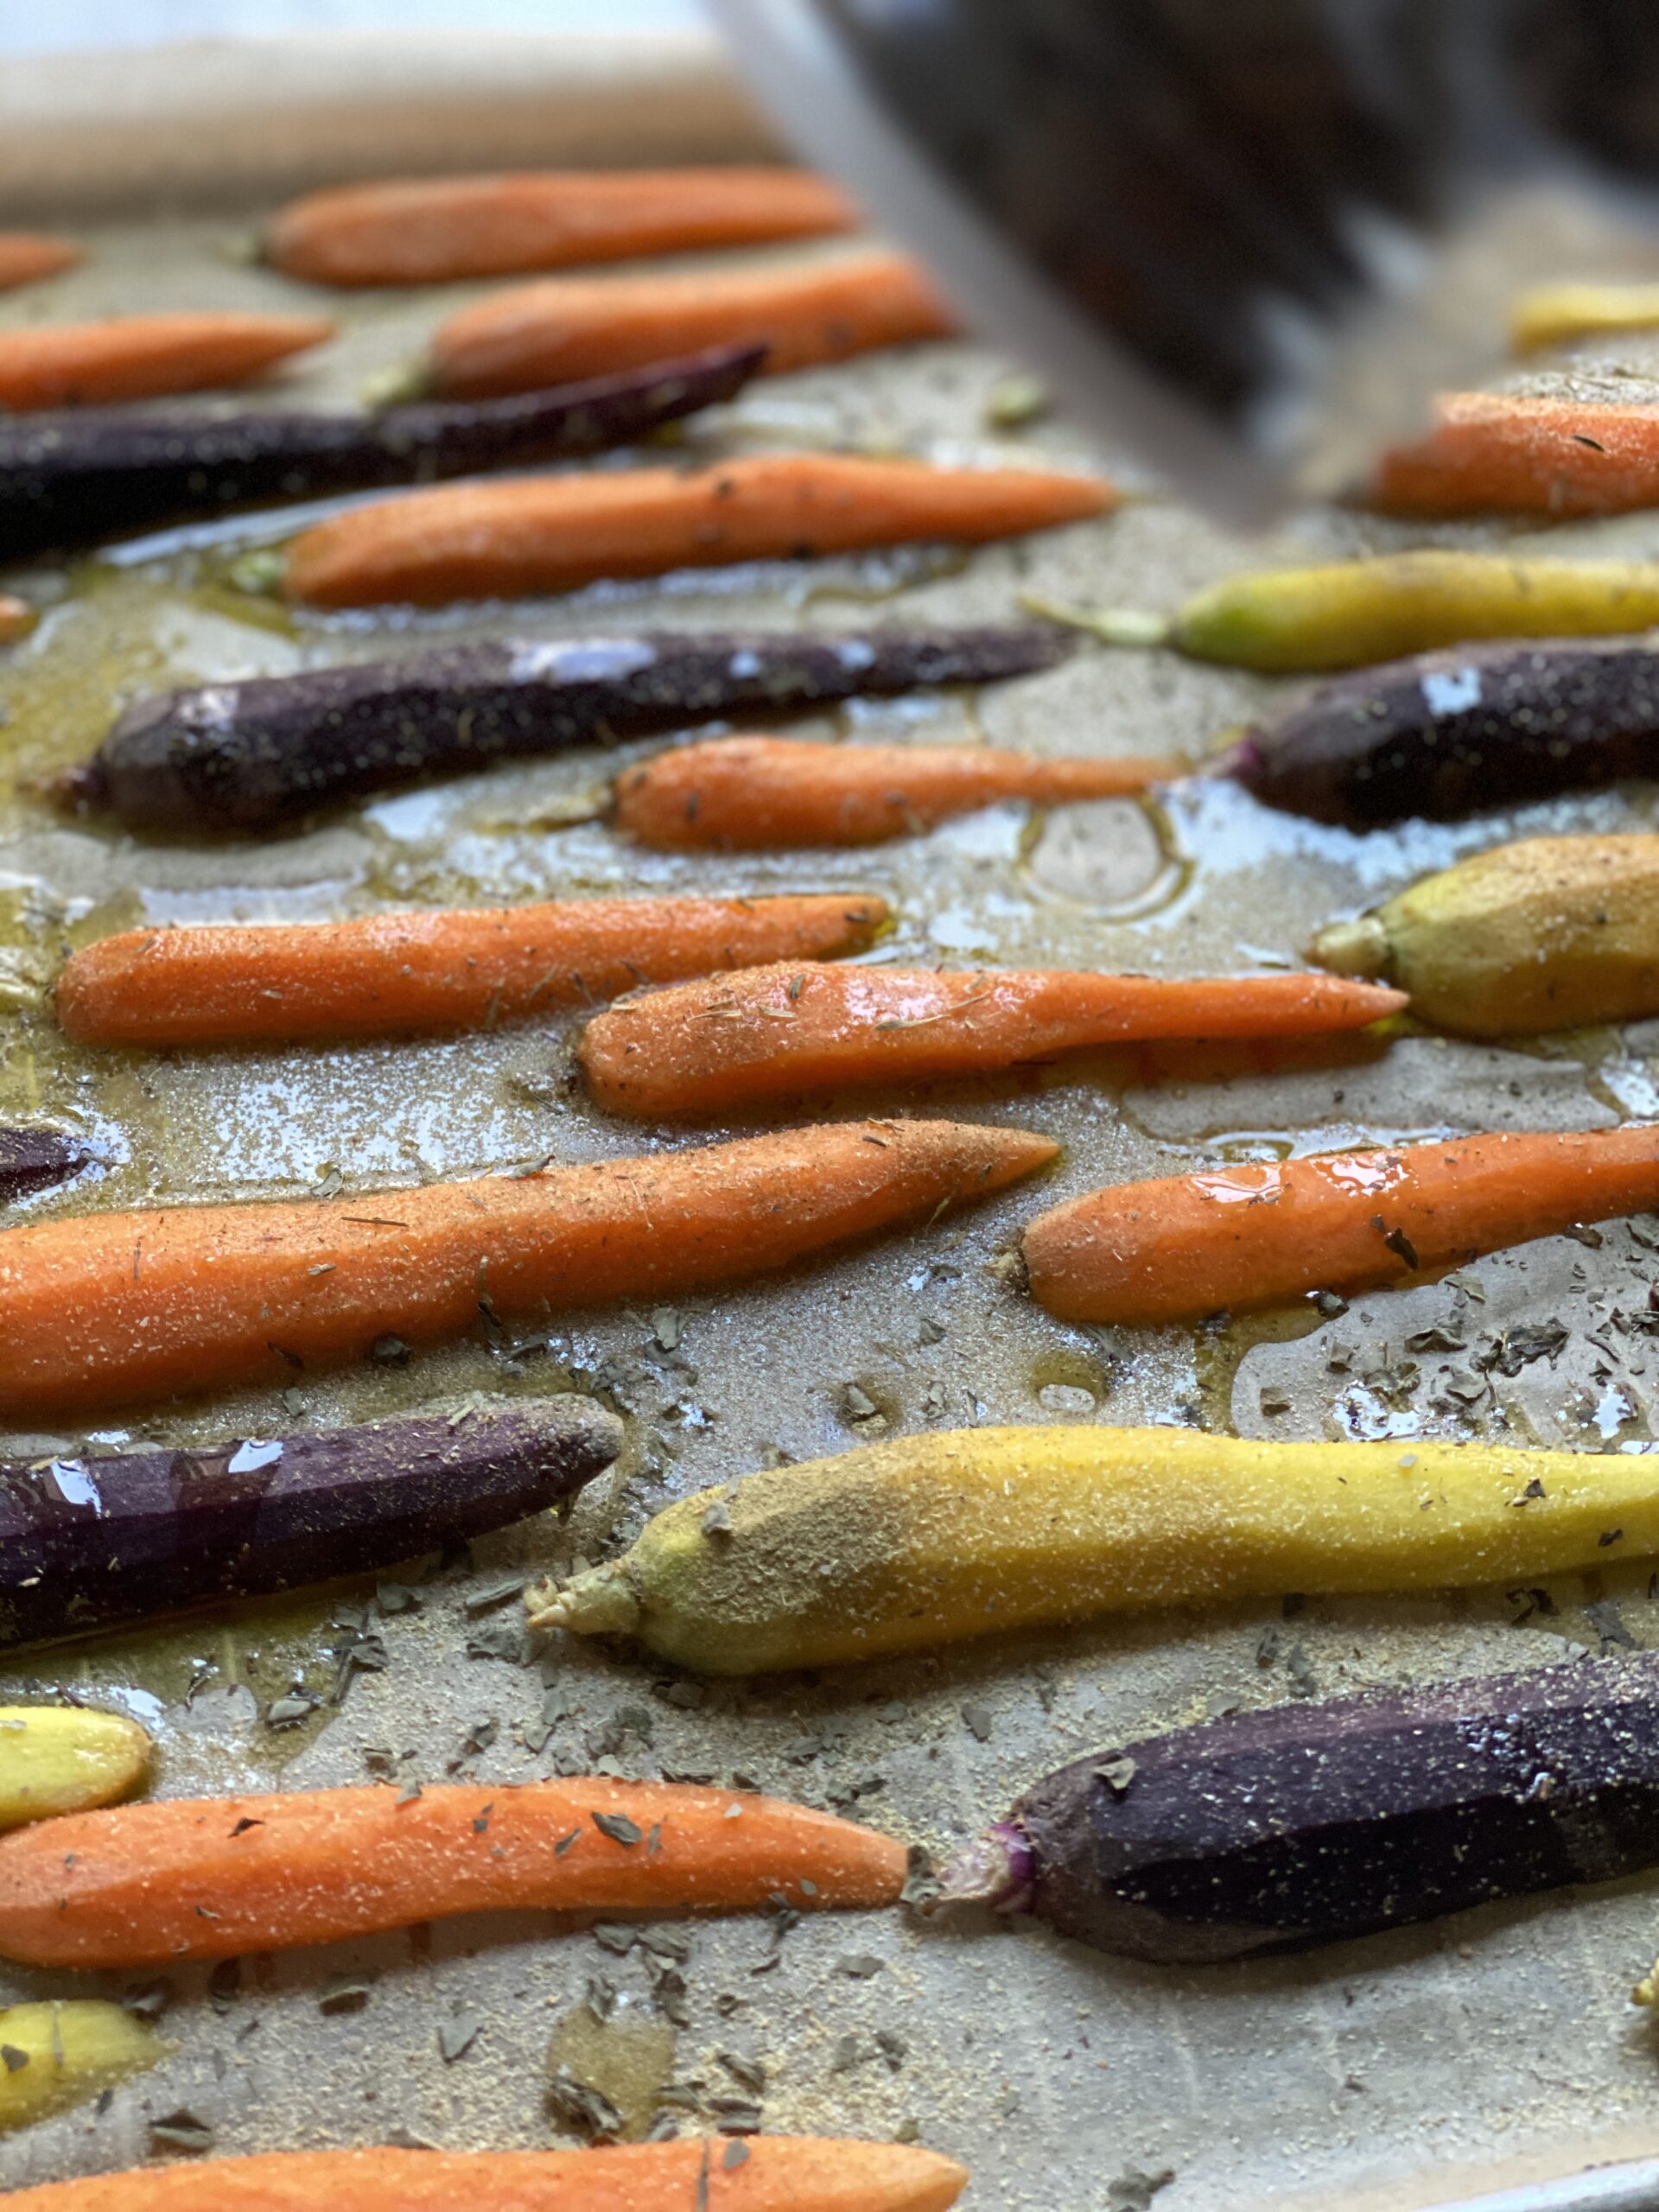 Adding balsamic glaze to garlic roasted carrots